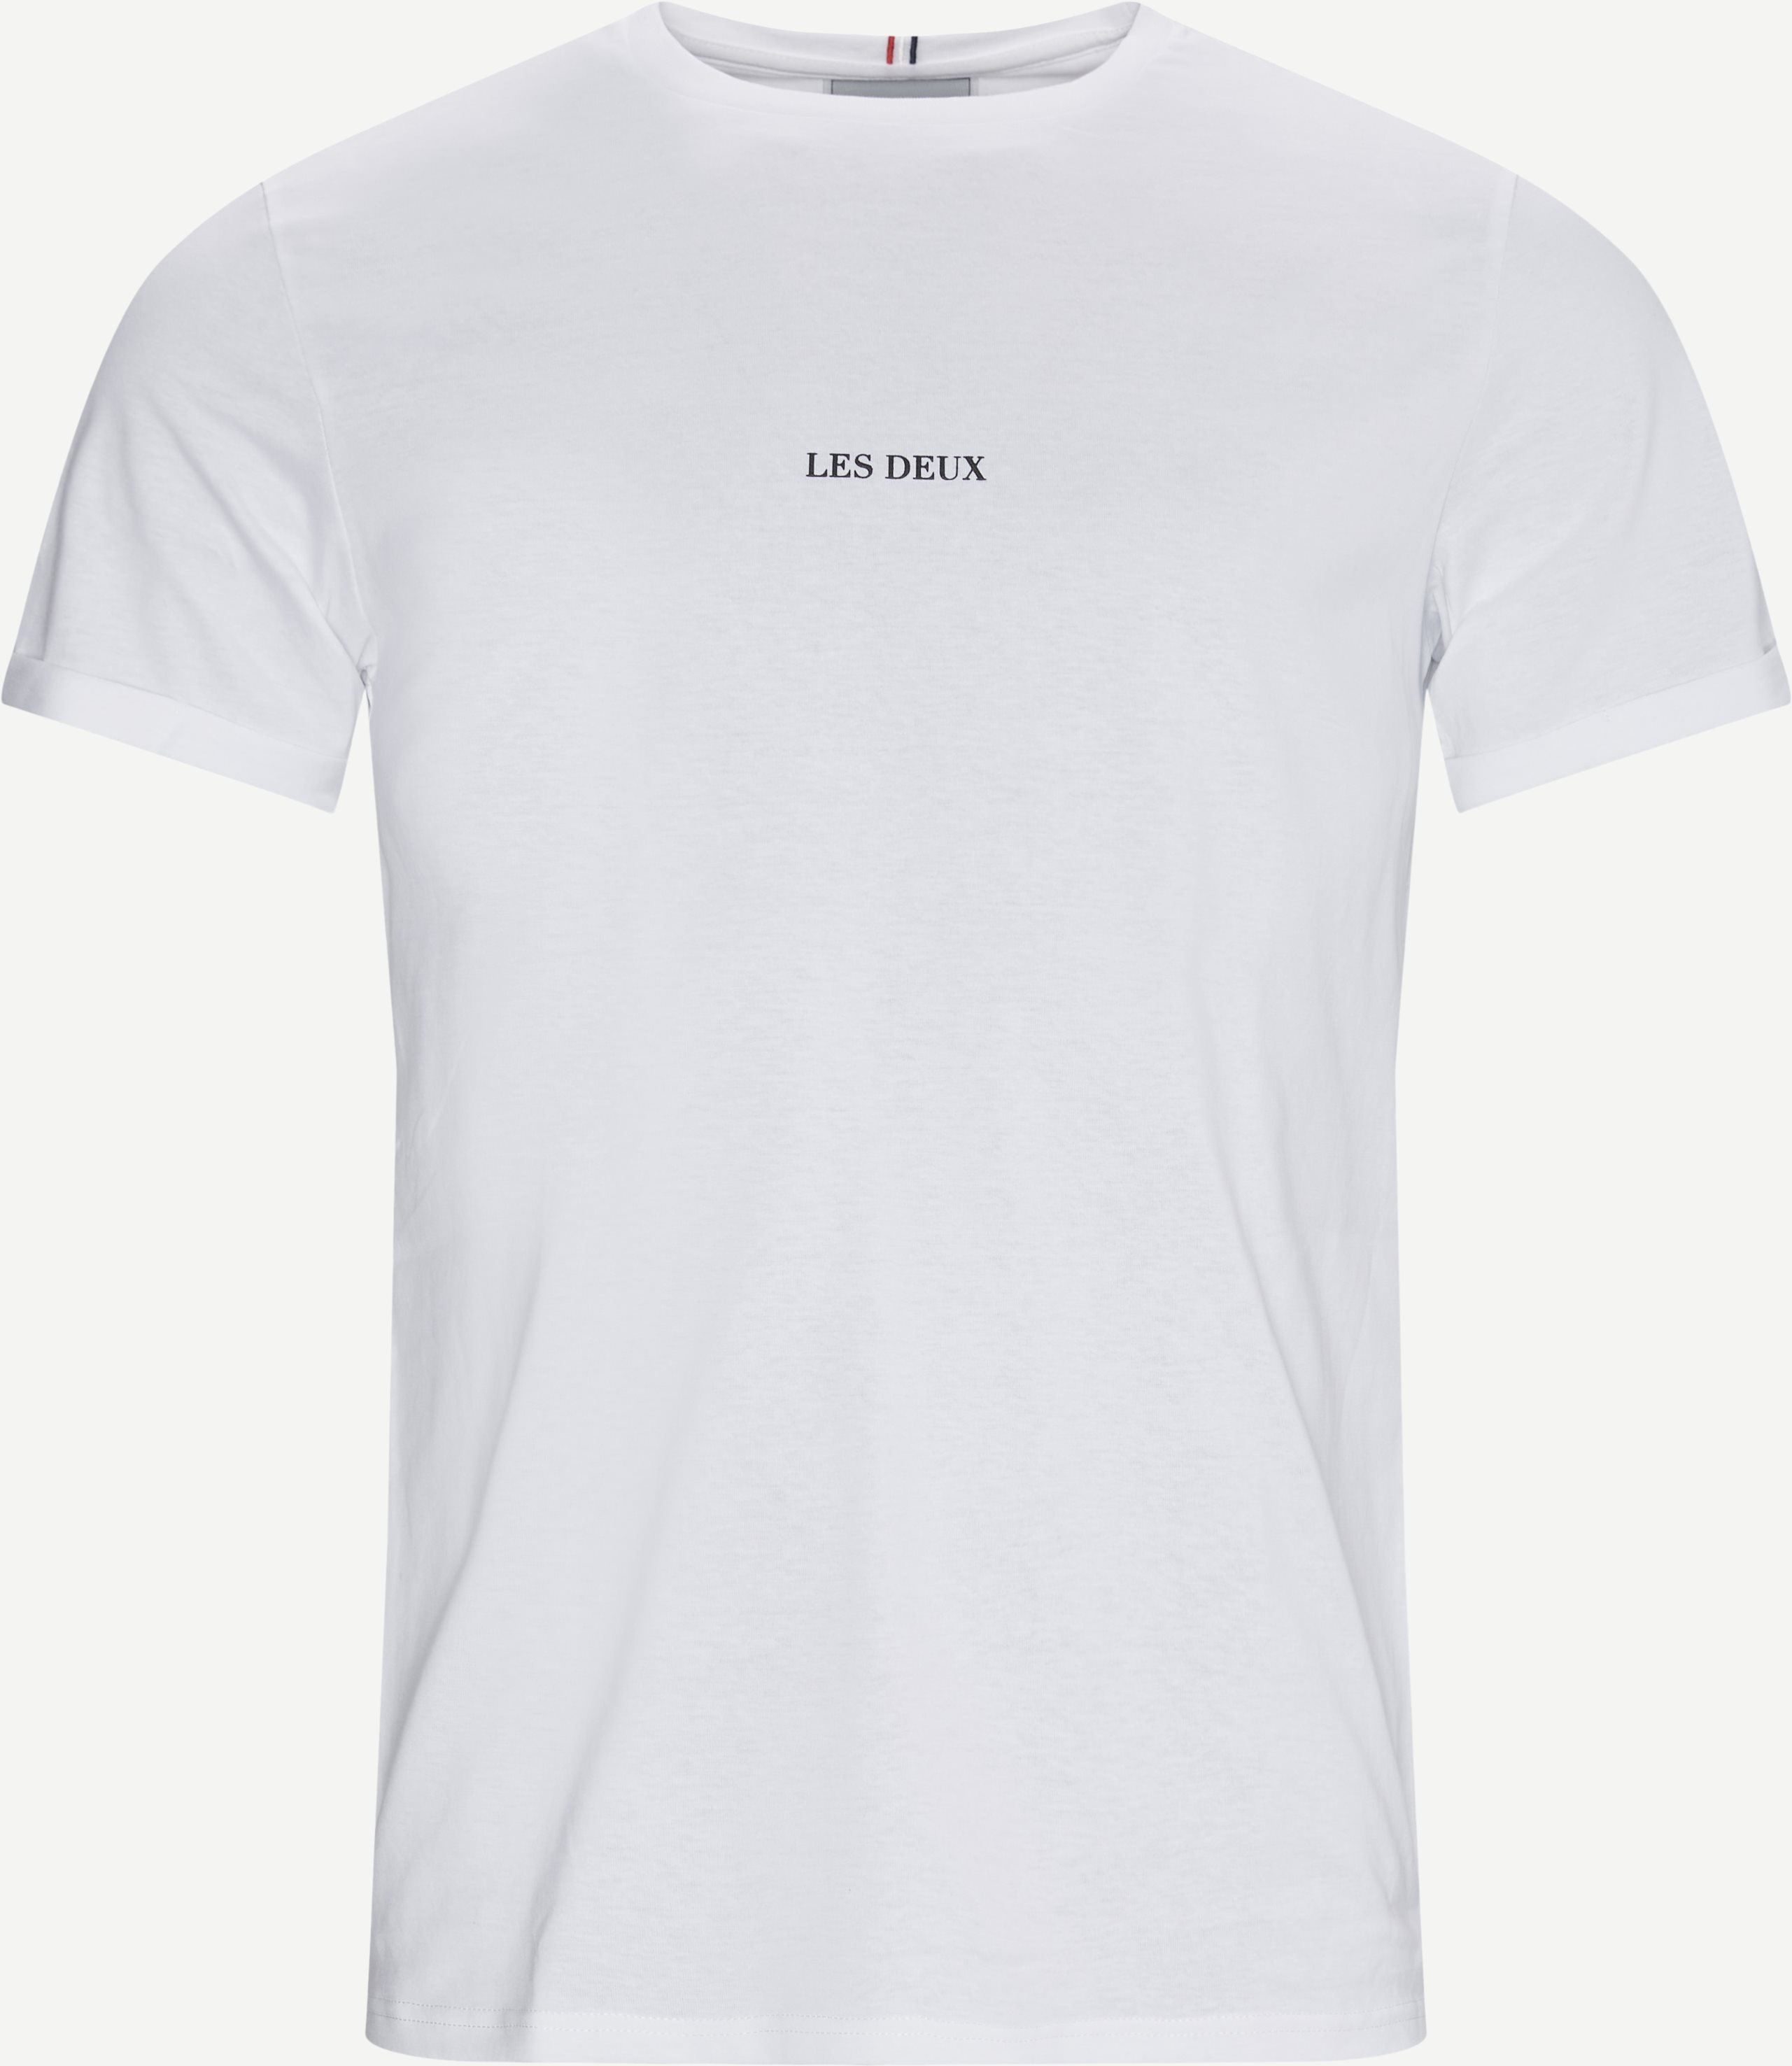 Lens T-shirt - T-shirts - Regular fit - Hvid